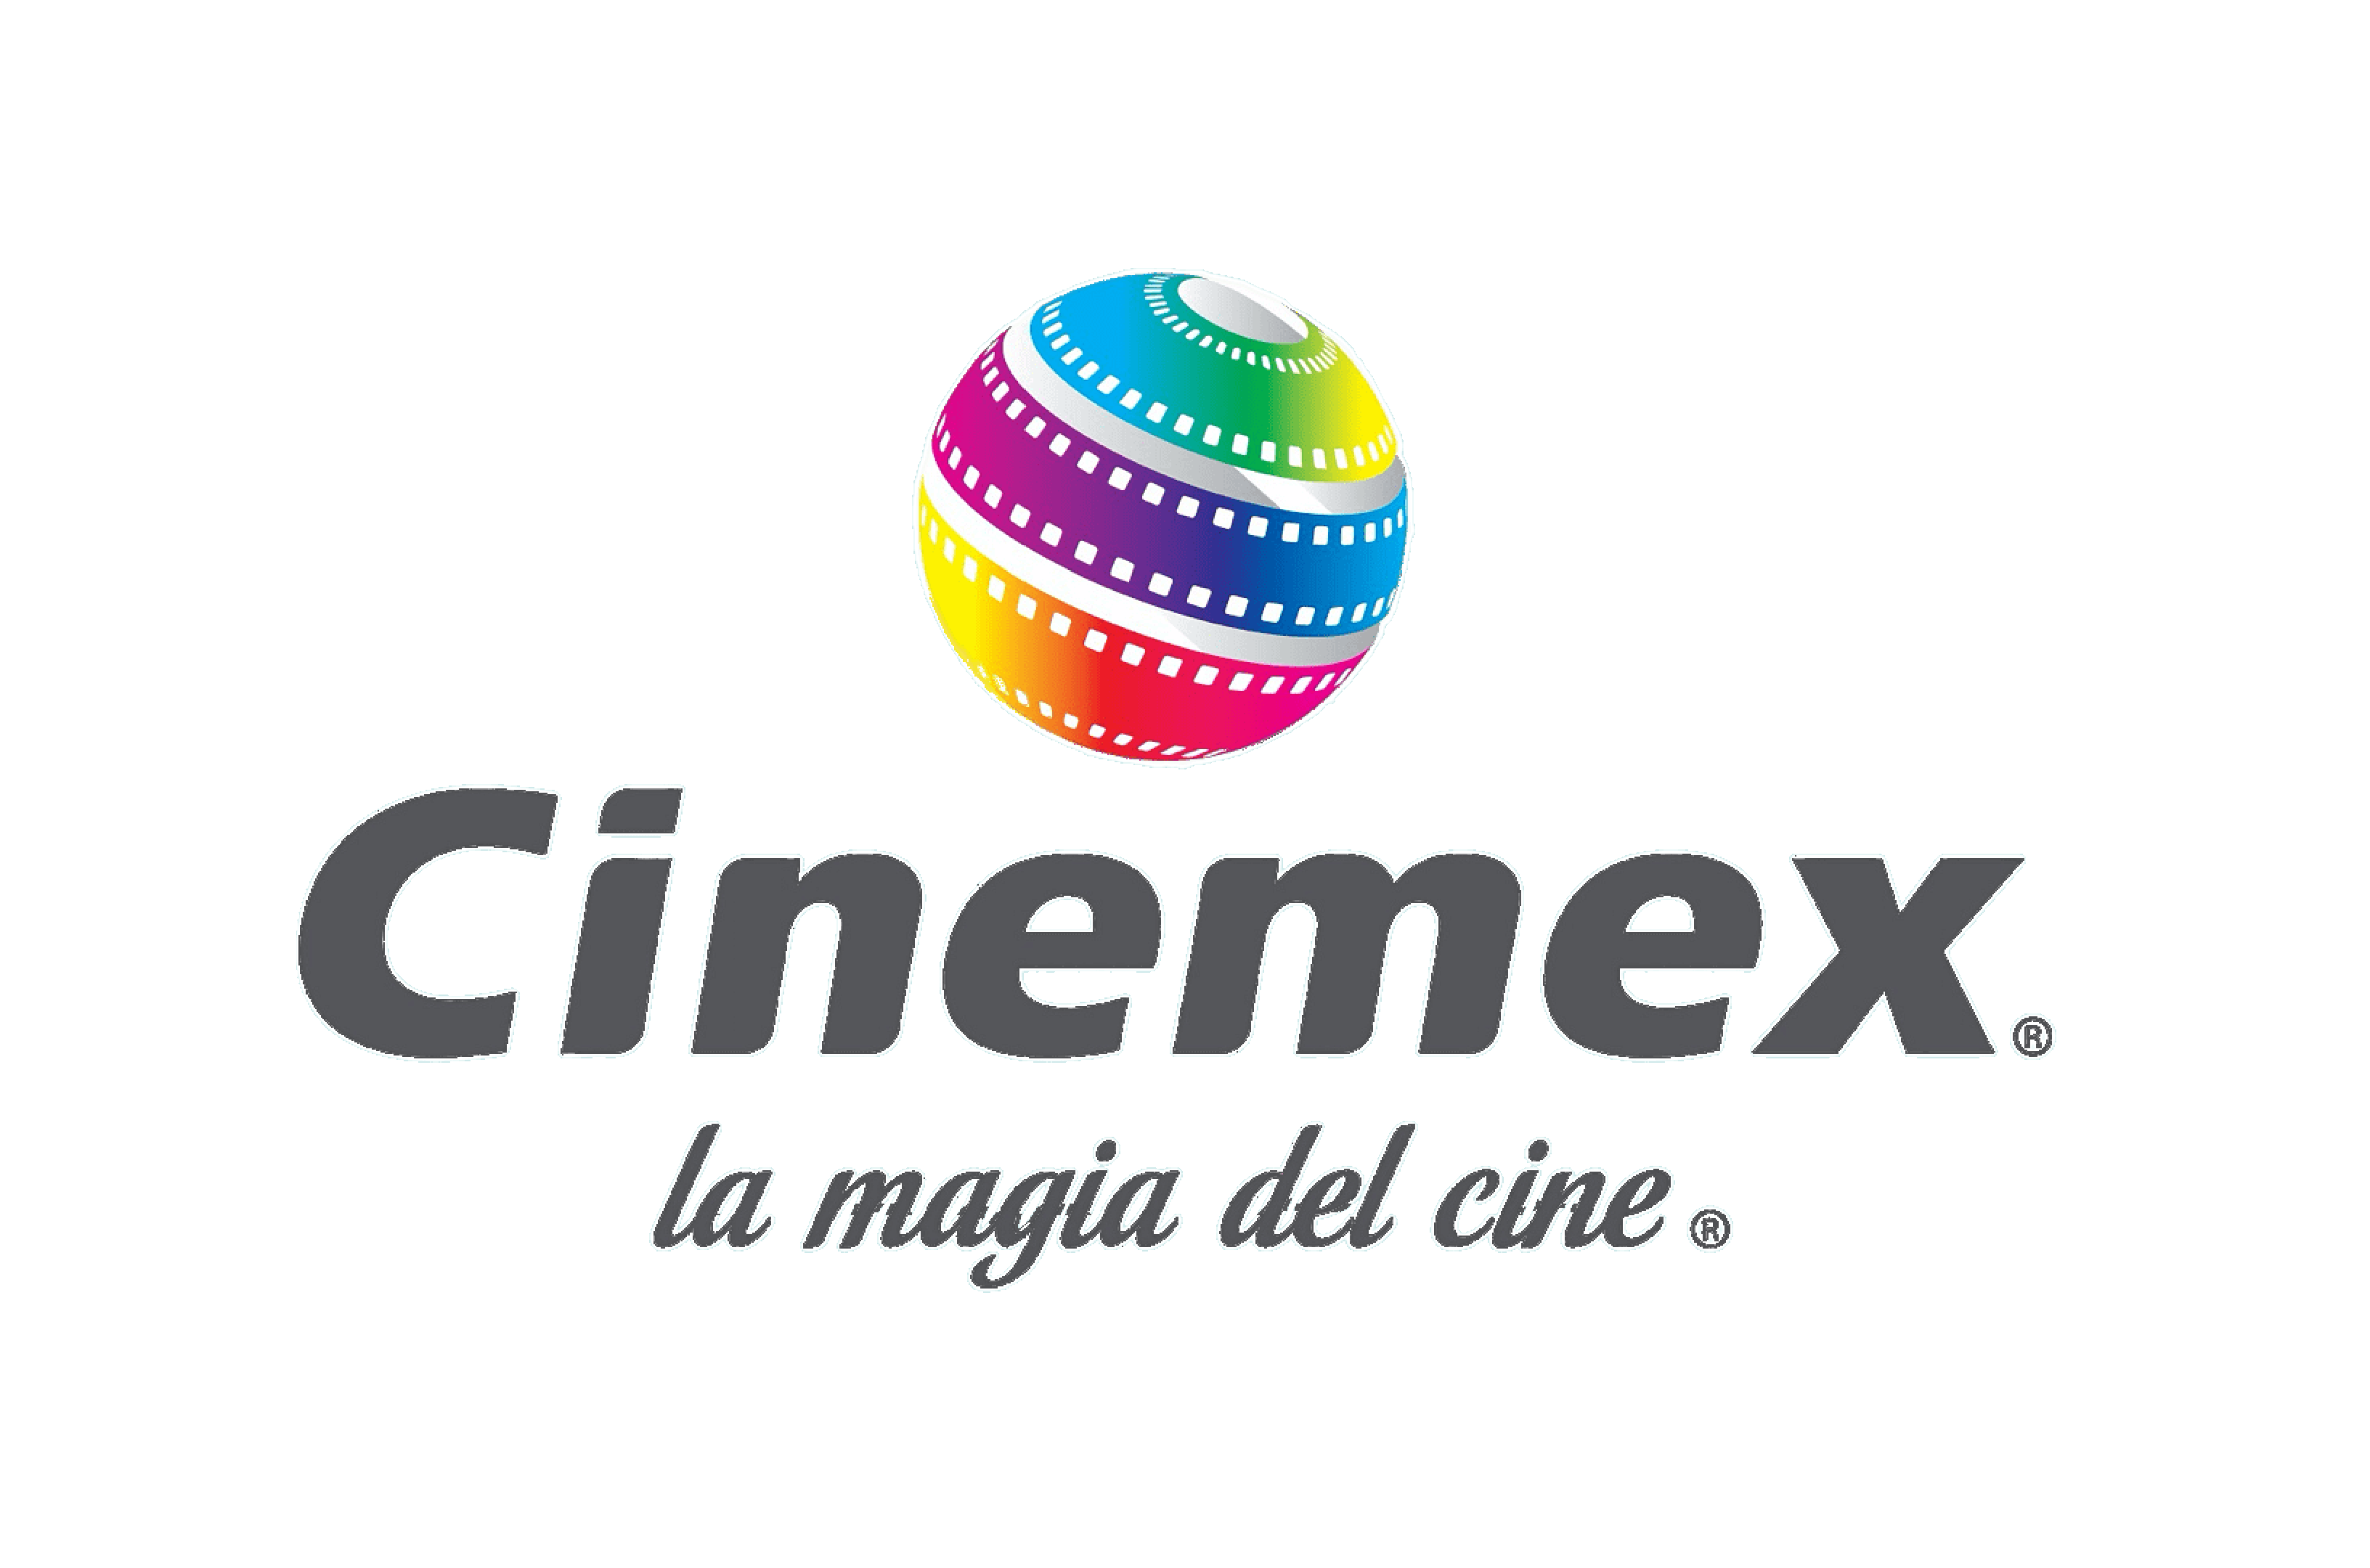 Gower Street Announces Partnership With Cinemex on EXPERT SENSE Service